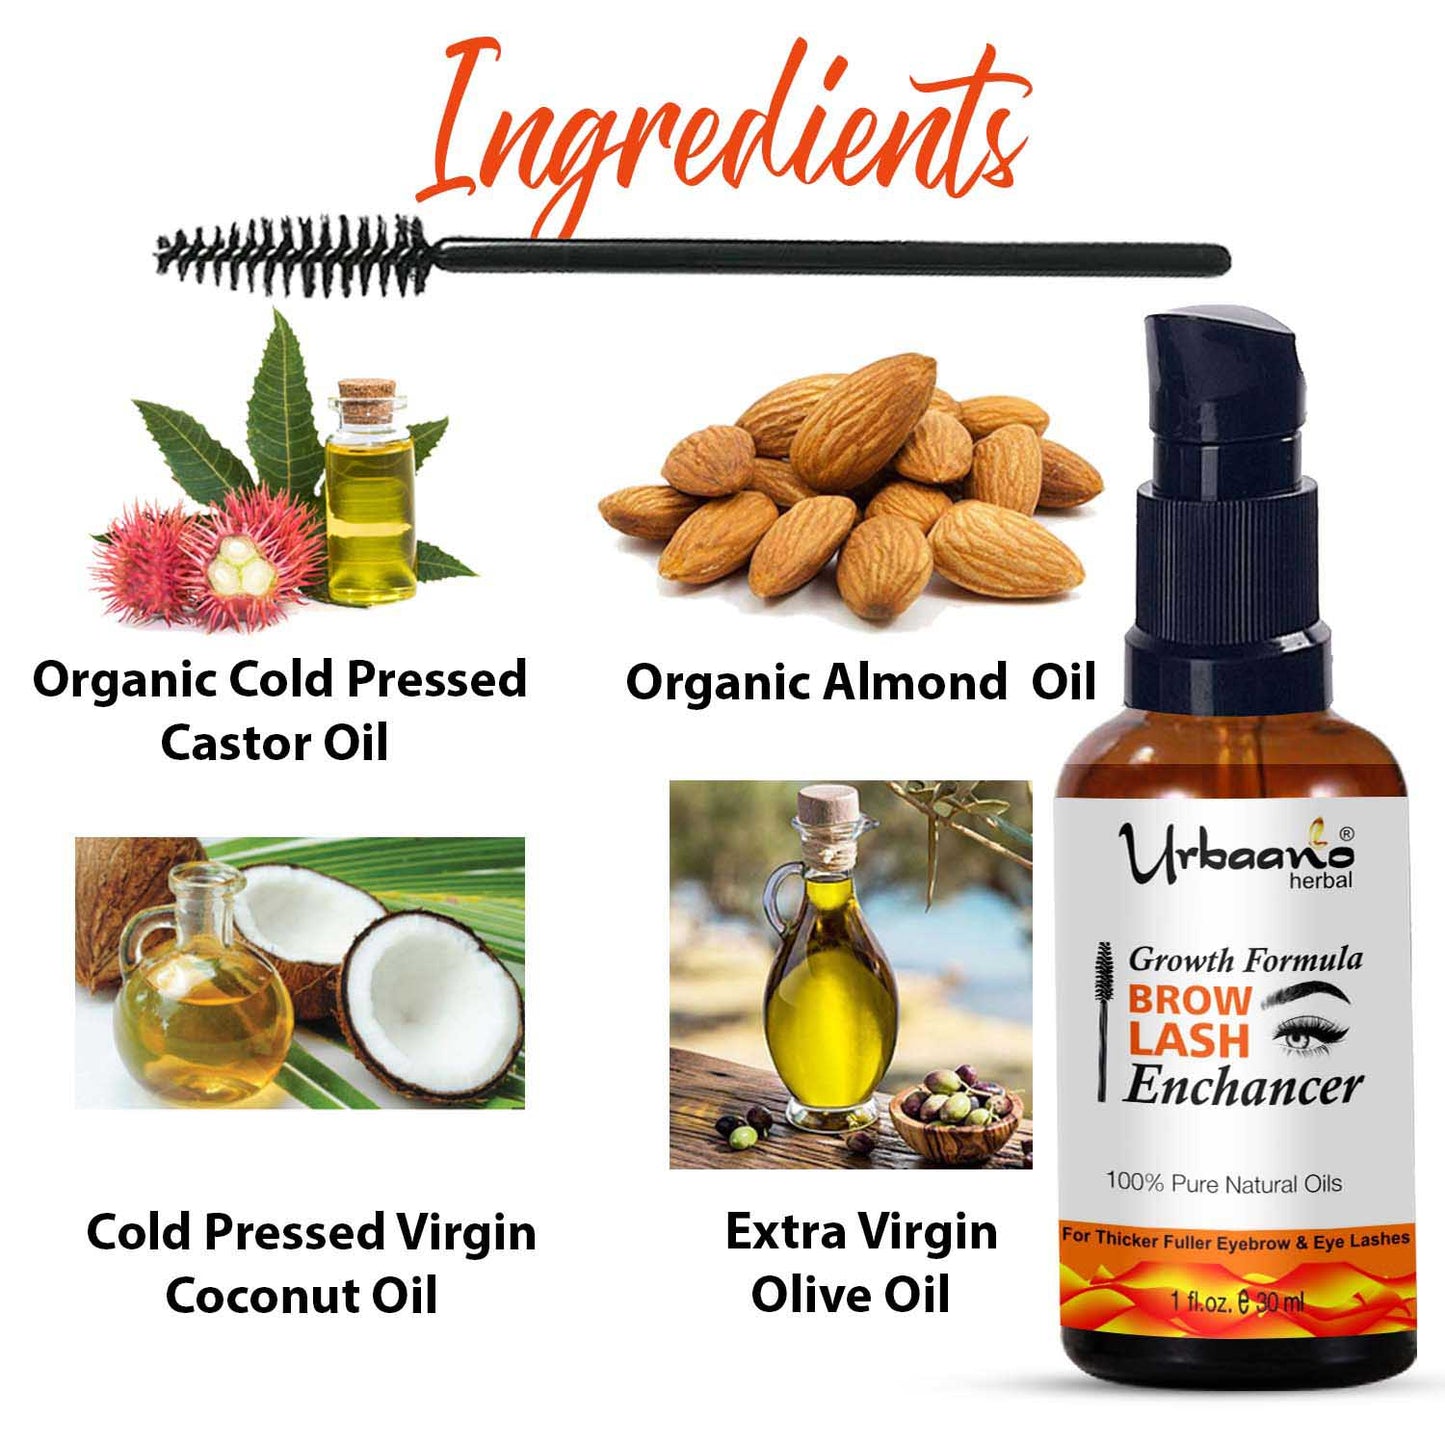 urbaano herbal eyebrow lash enhancer growth formula with organic almond, castor, coconut oil , virgin olve oil